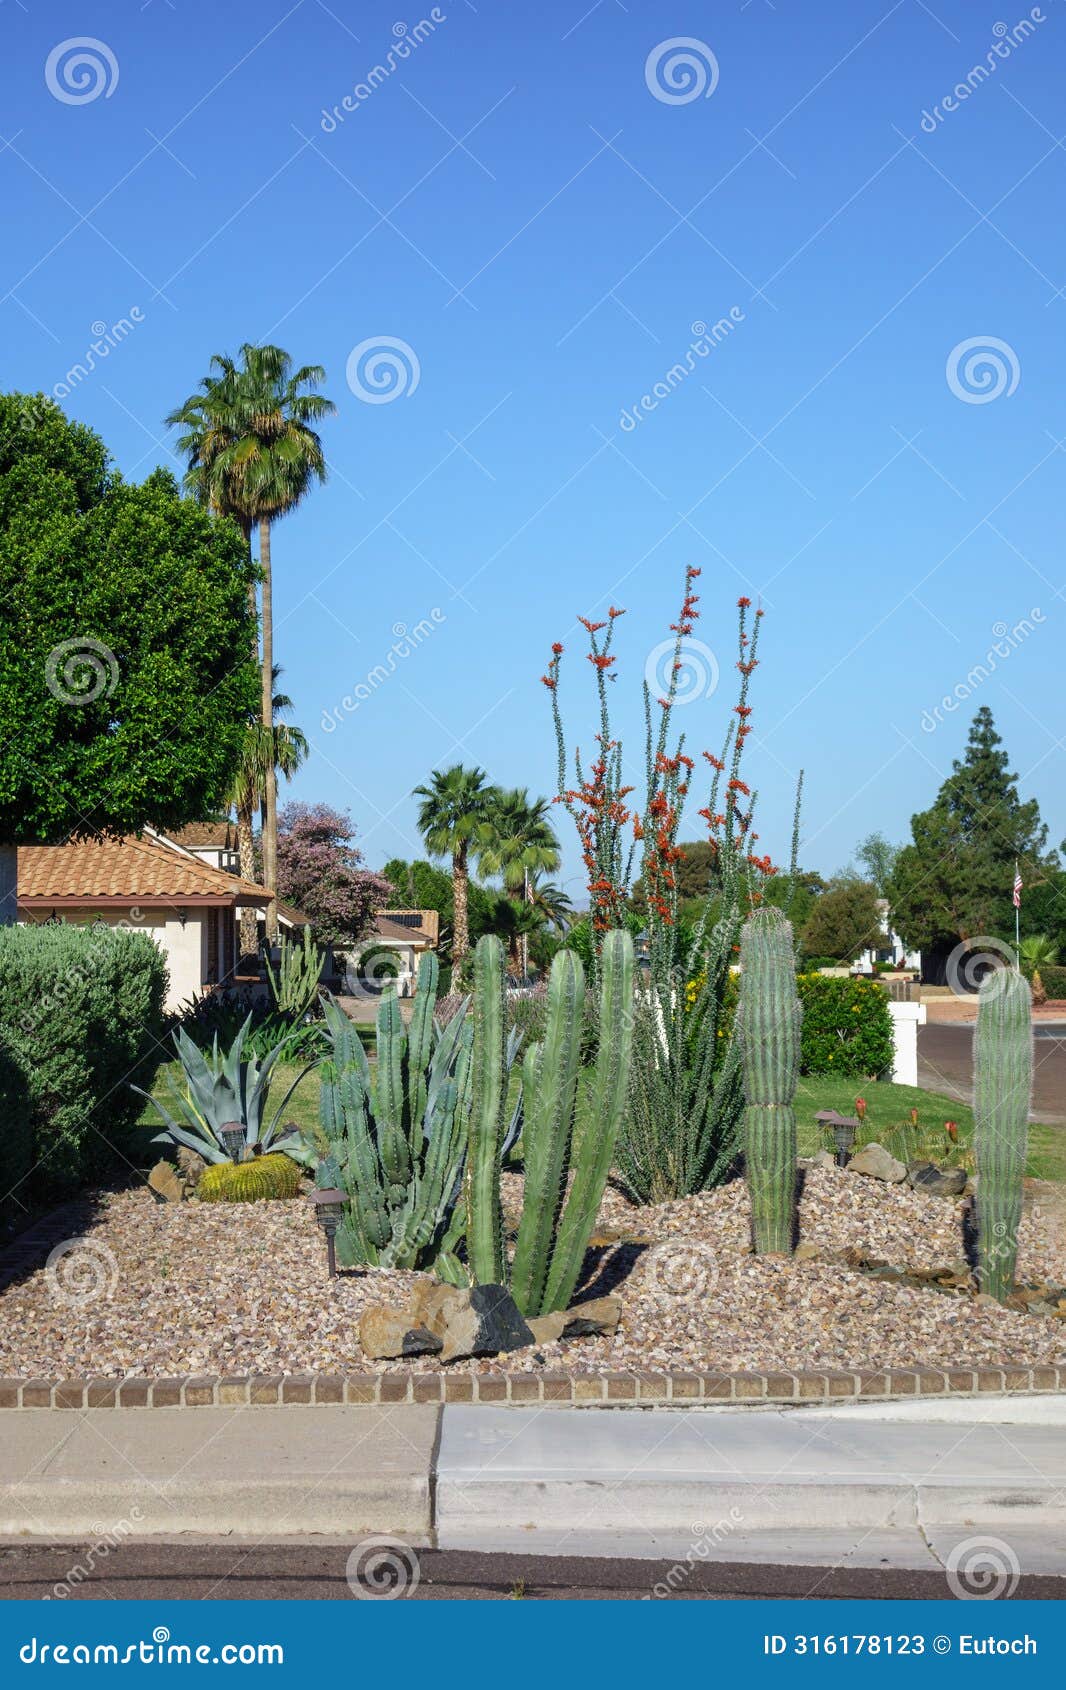 cereus, saguaro, ocotillo and agave in arizona xeriscaping